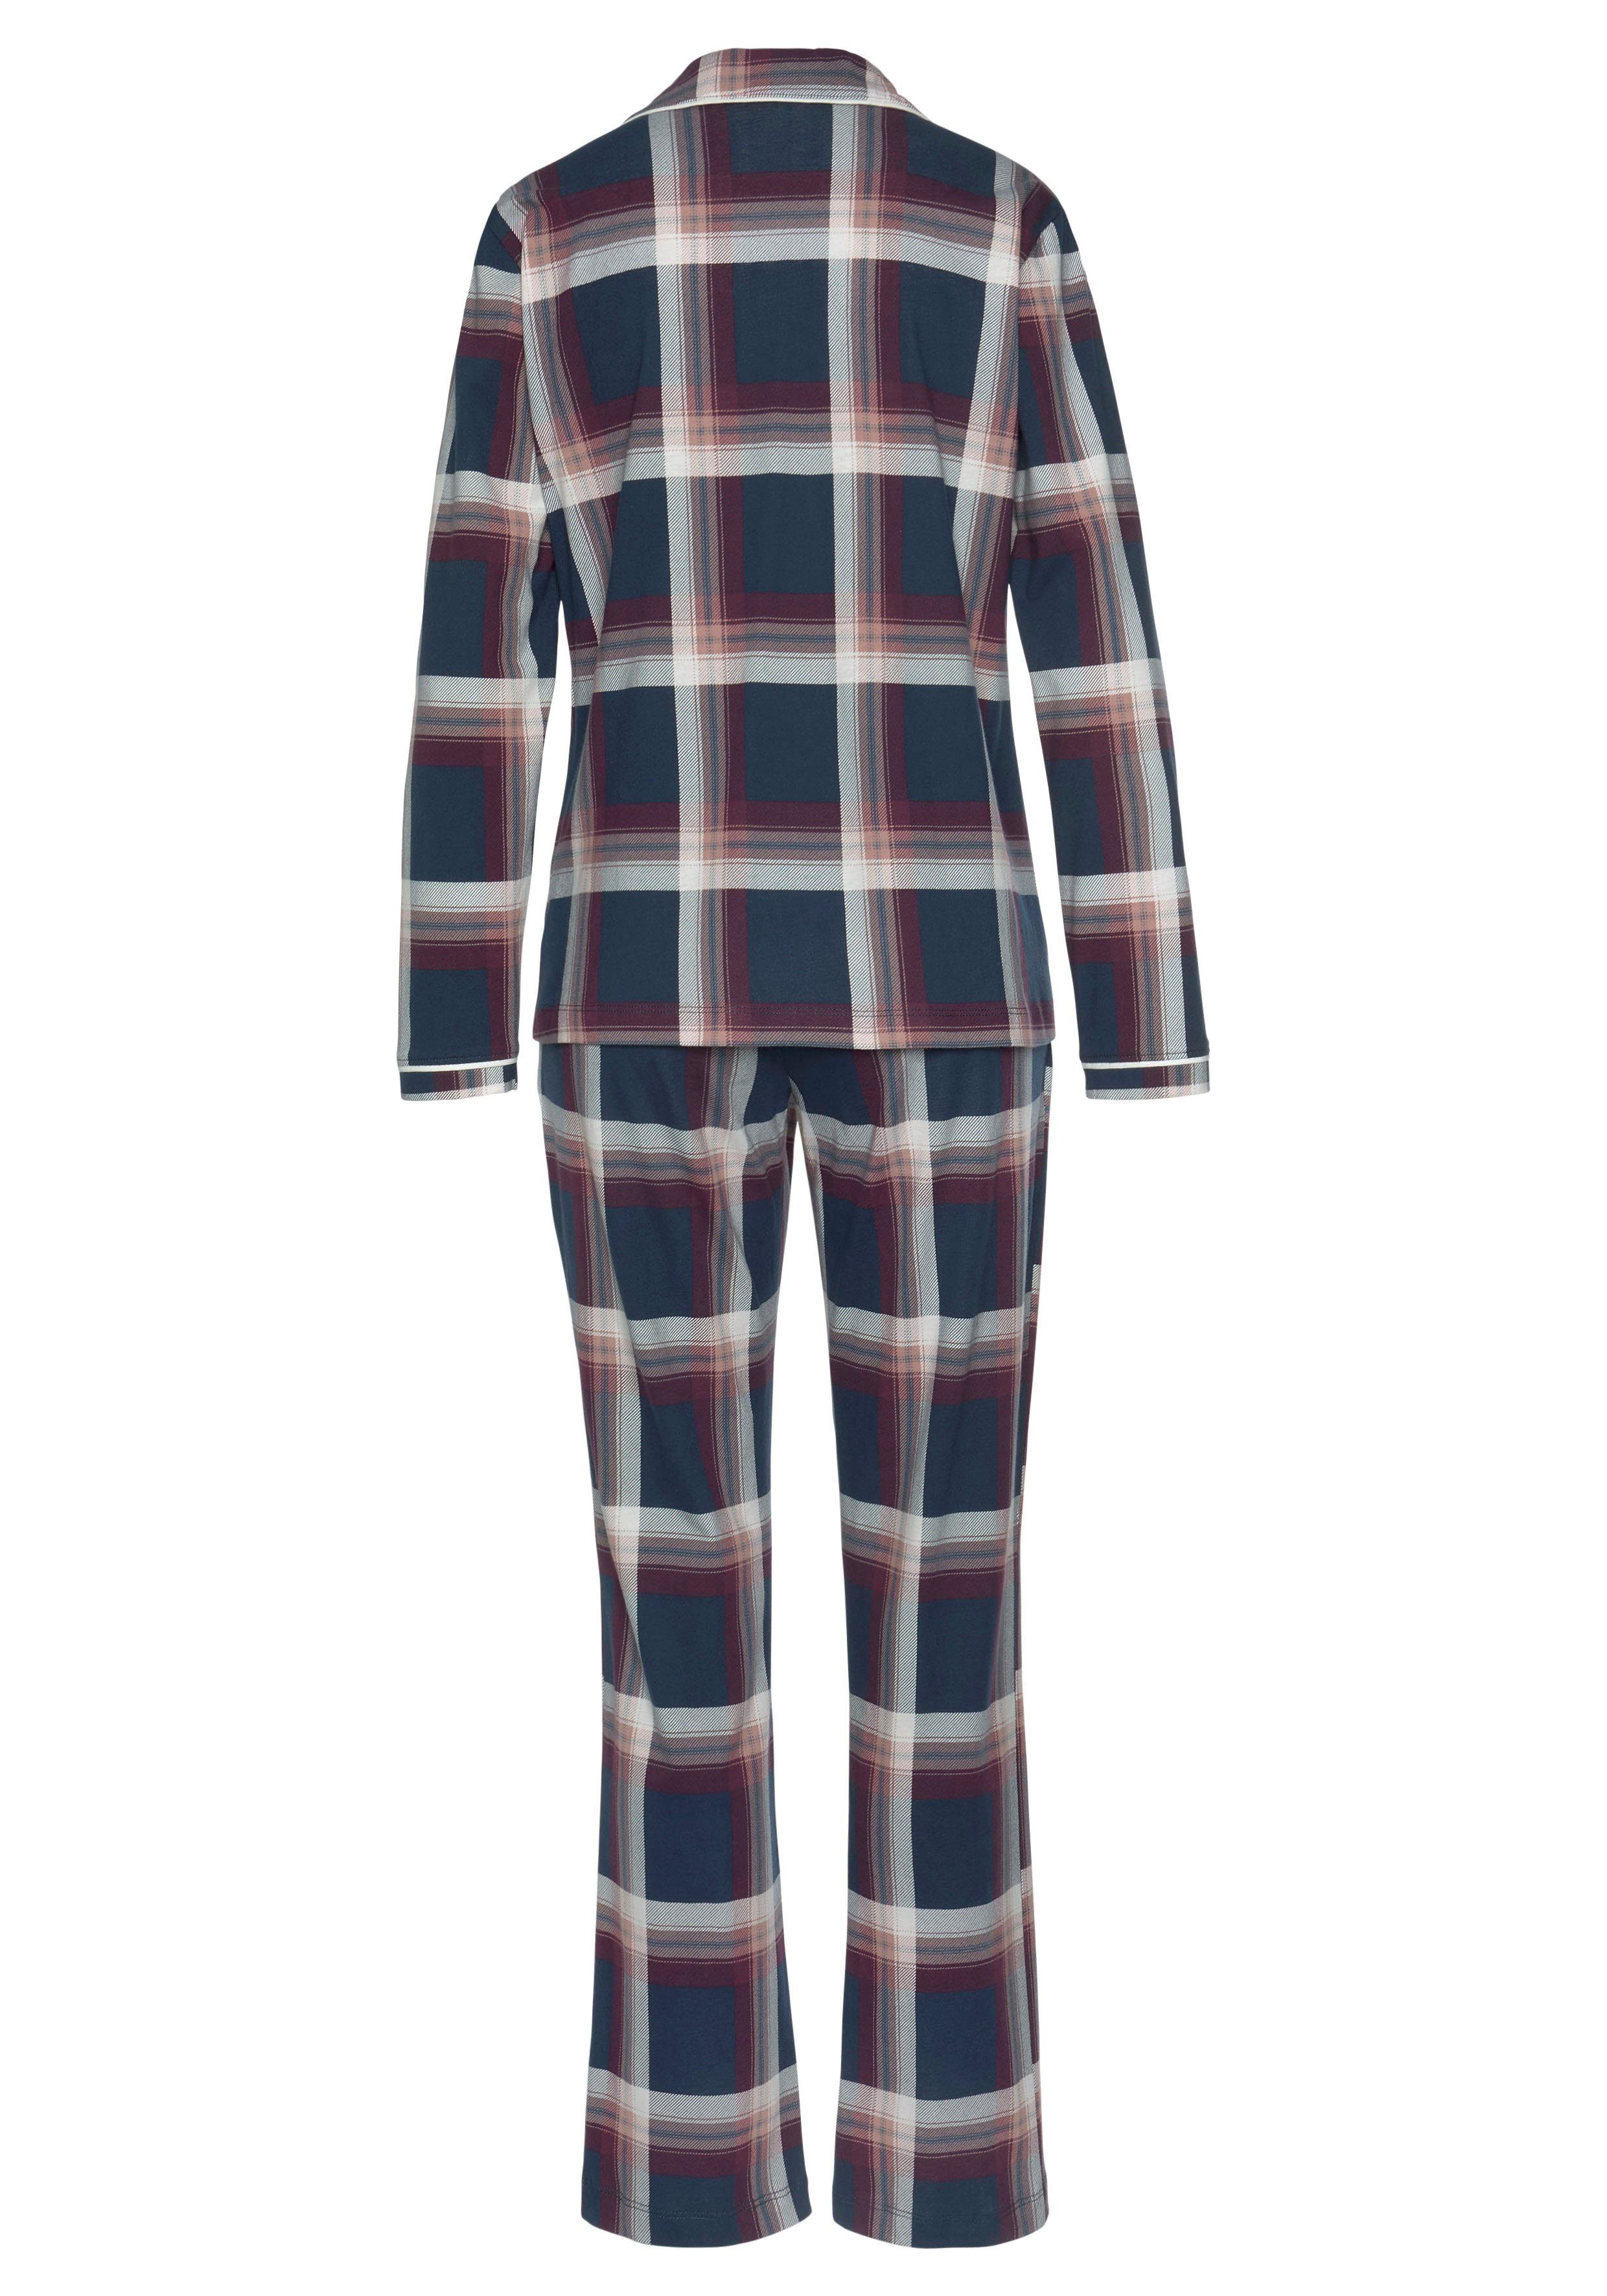 Karo-Muster Pyjama im klassischen tlg) s.Oliver (2